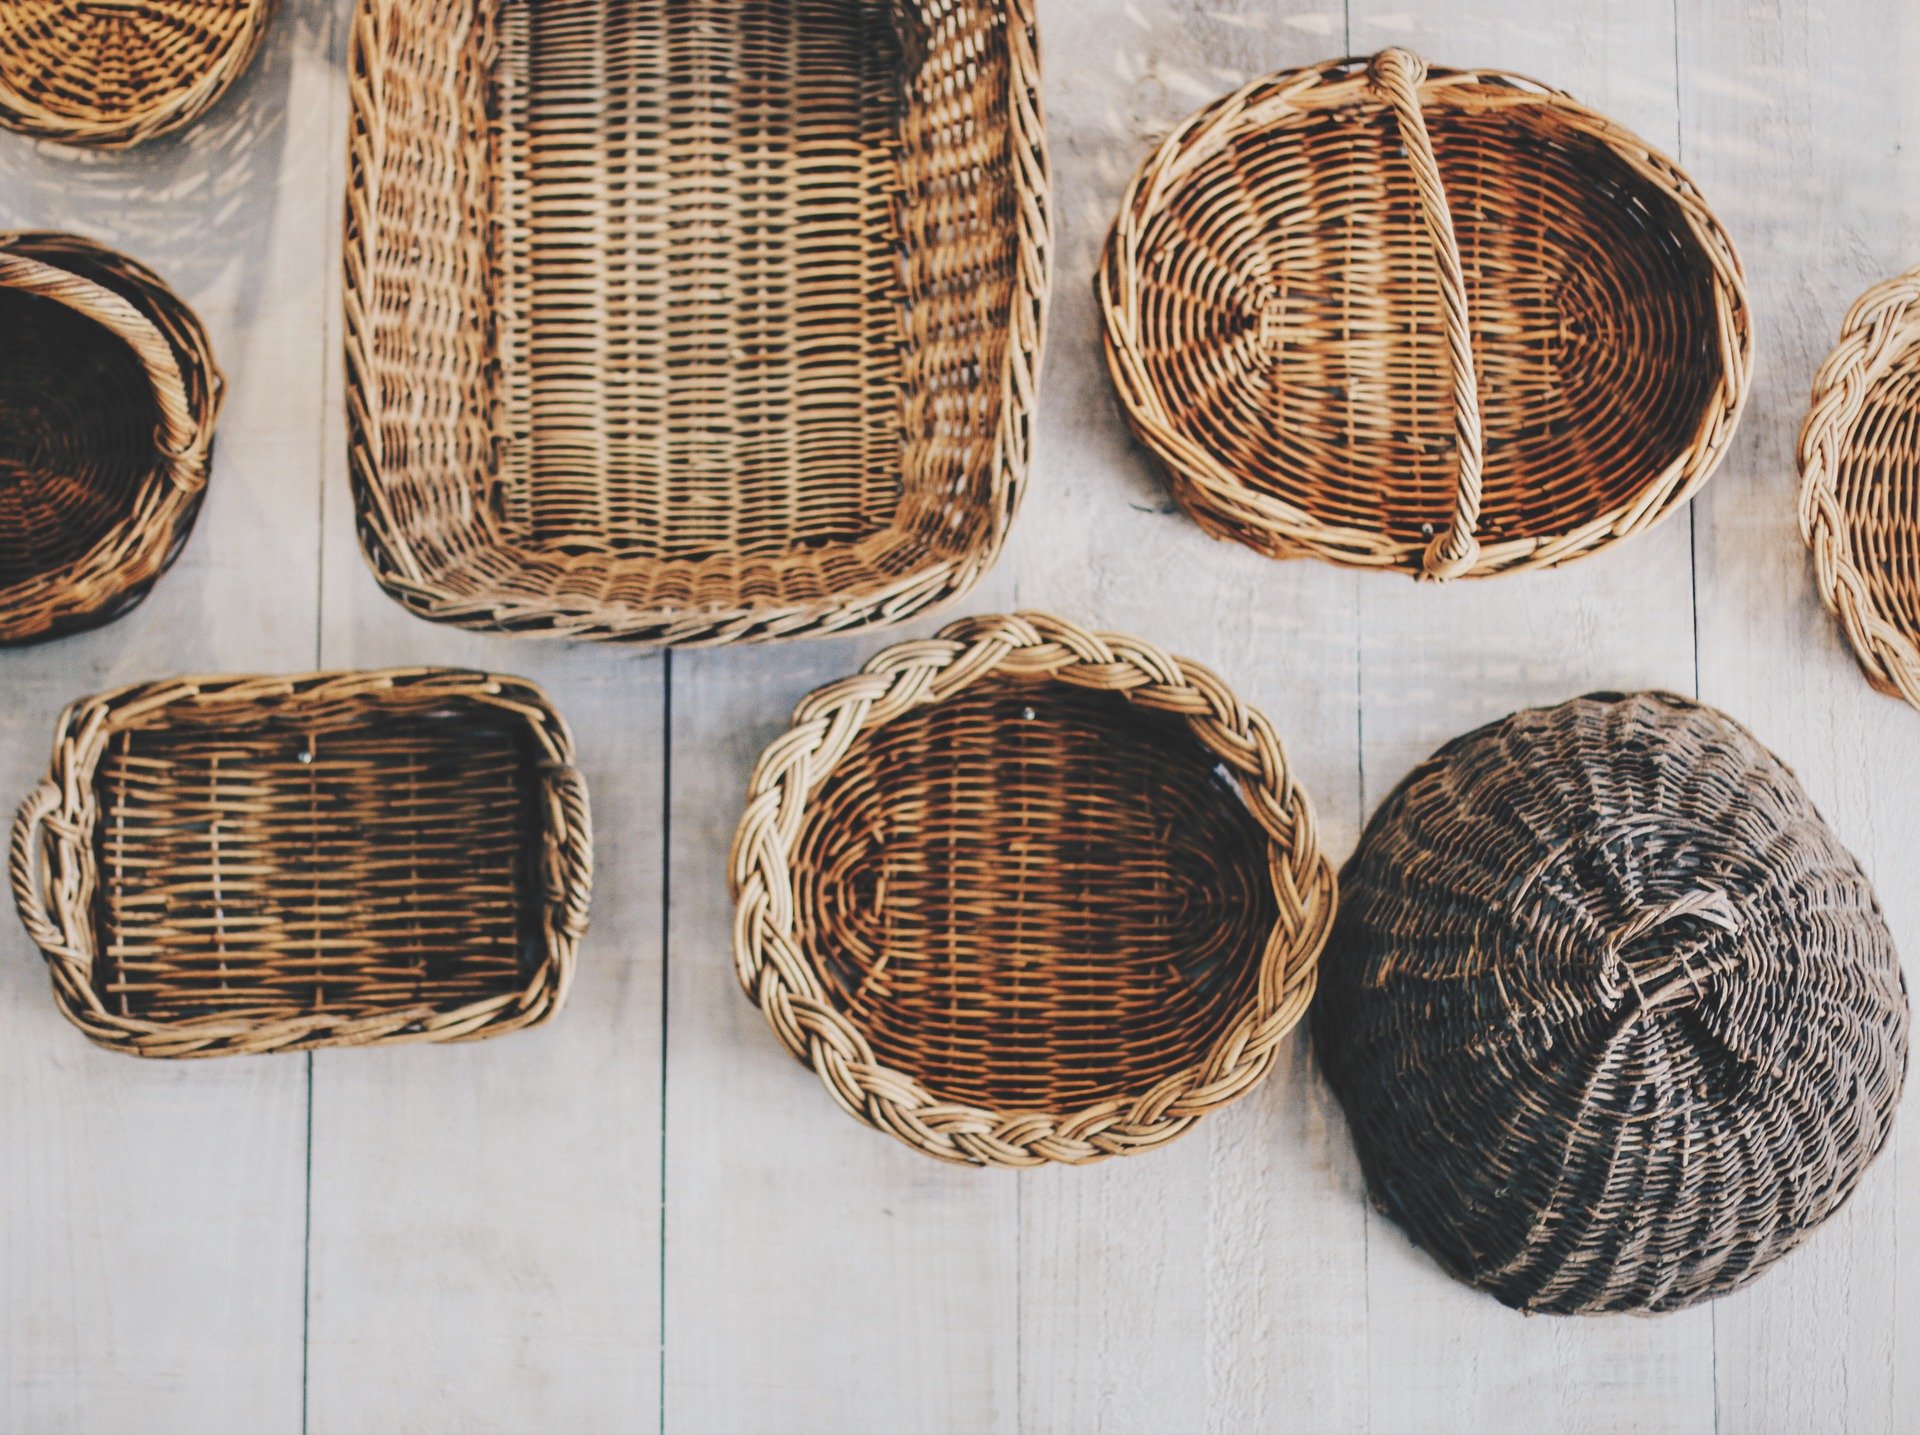 Baskets With Olive Sticks